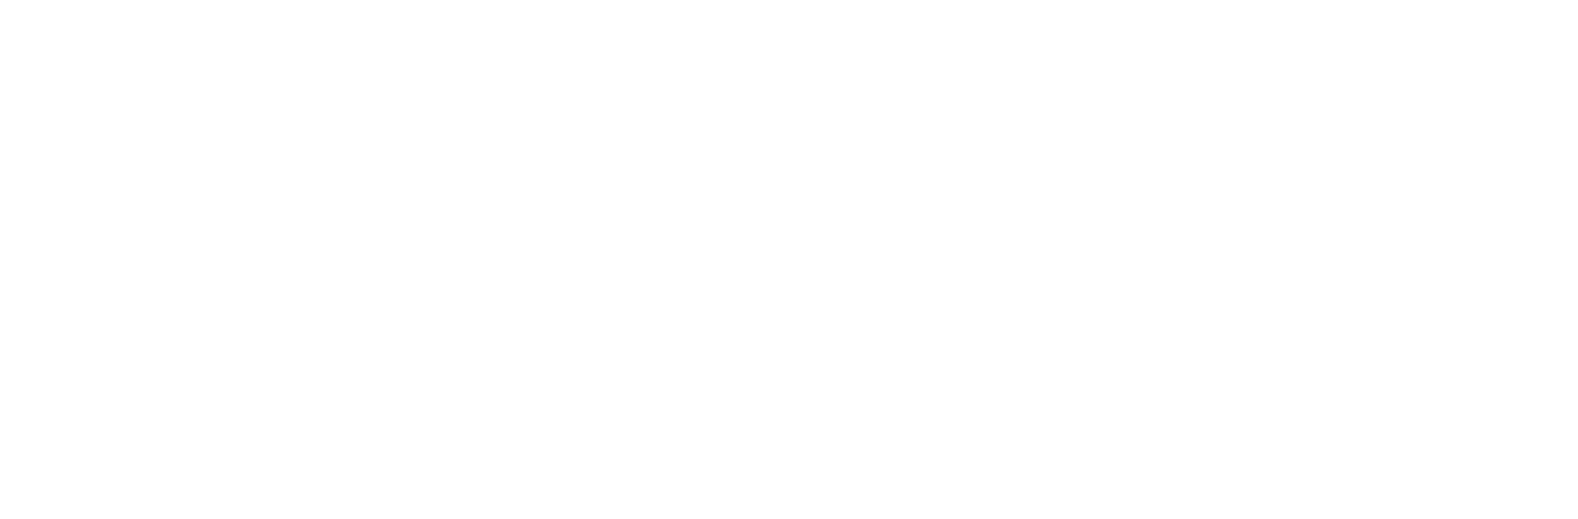 Preserve at Preston